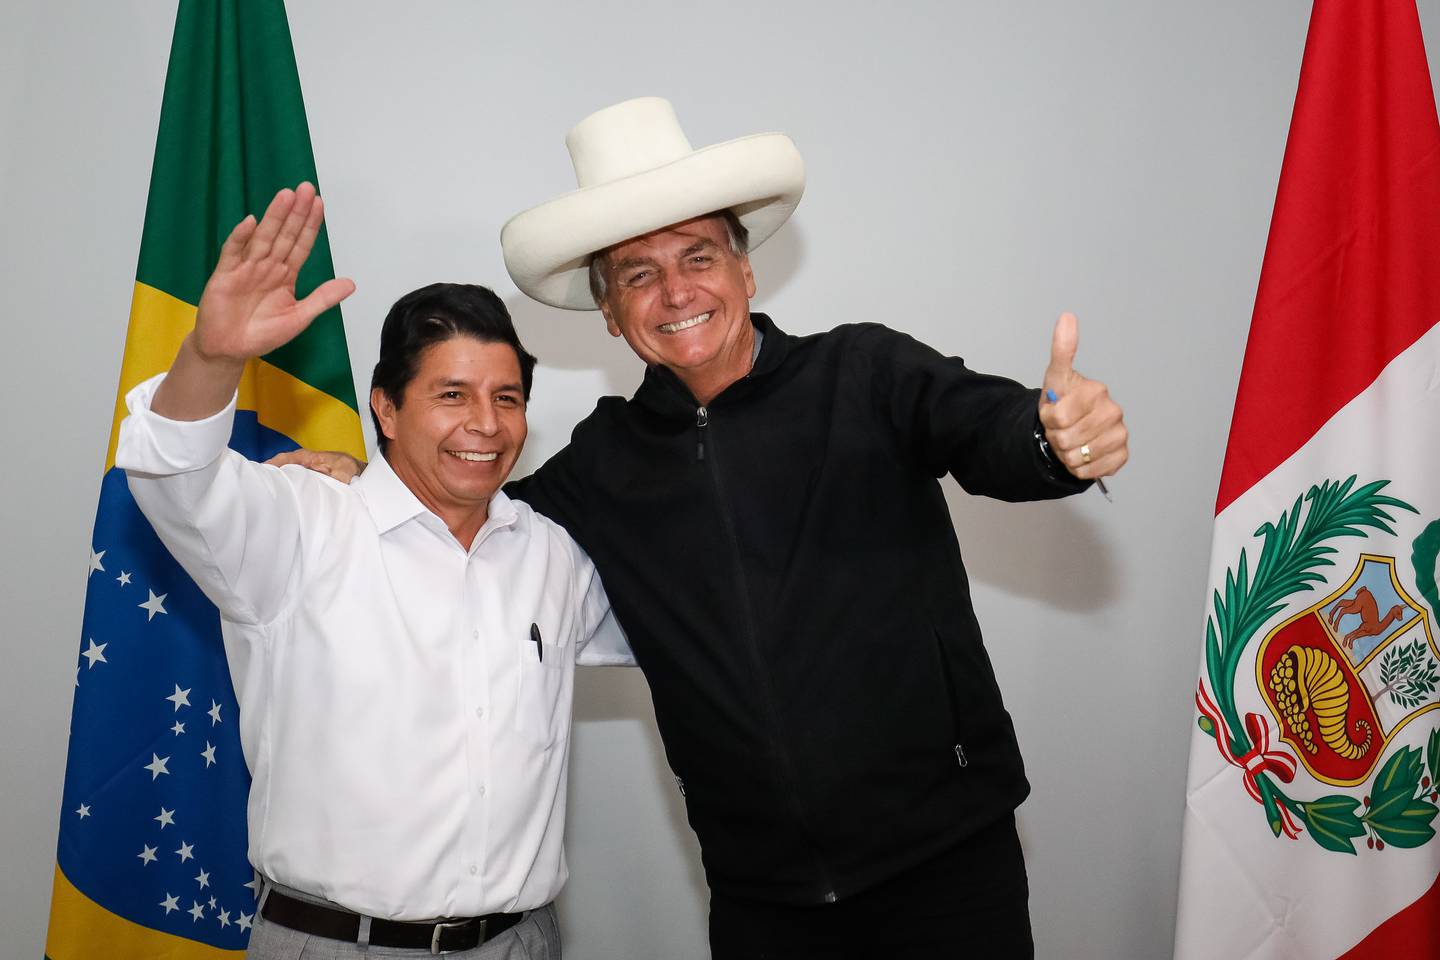 Brazil's President Jair Bolsonaro met with his Peruvian counterpart Pedro Castillo in Brazil on Thursday.dfd